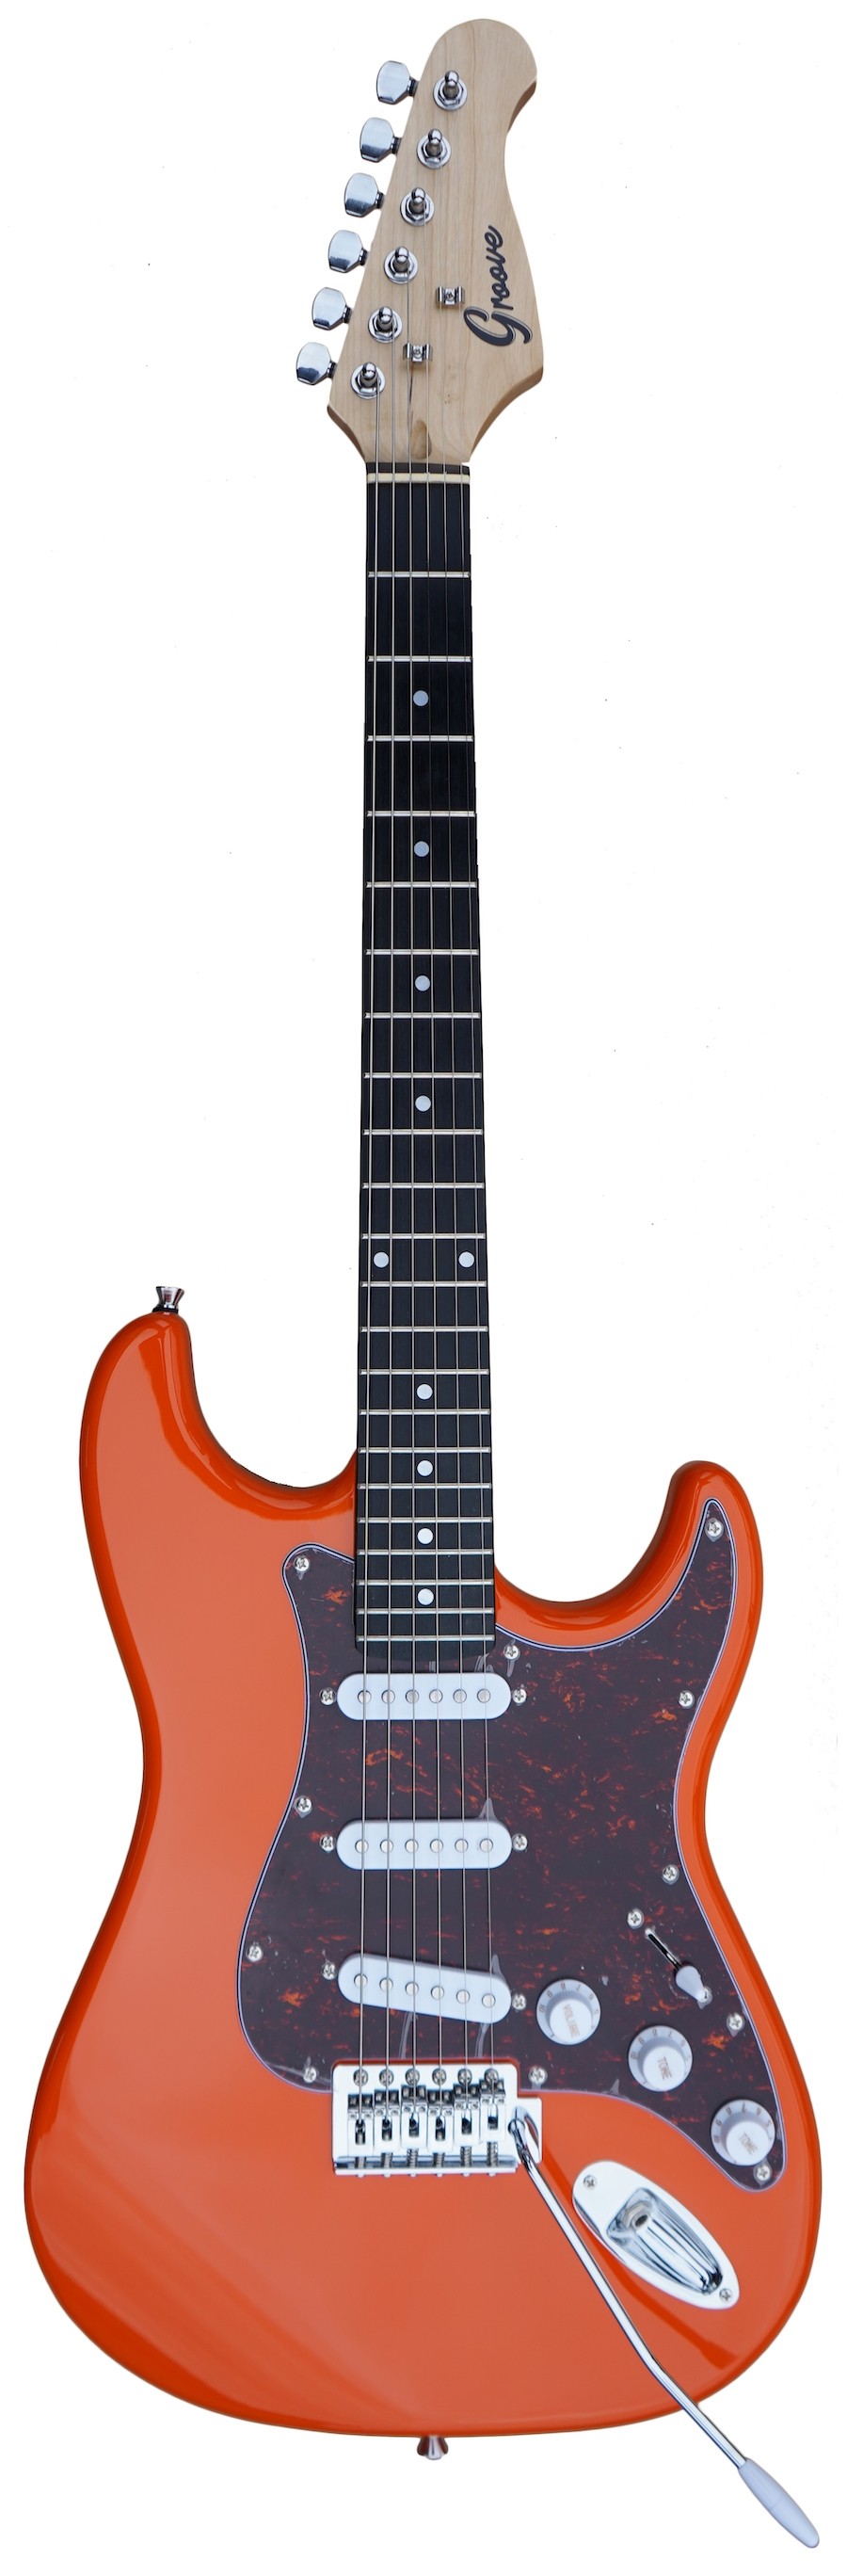 Groove Strat-Shaped Electric guitar - Orange